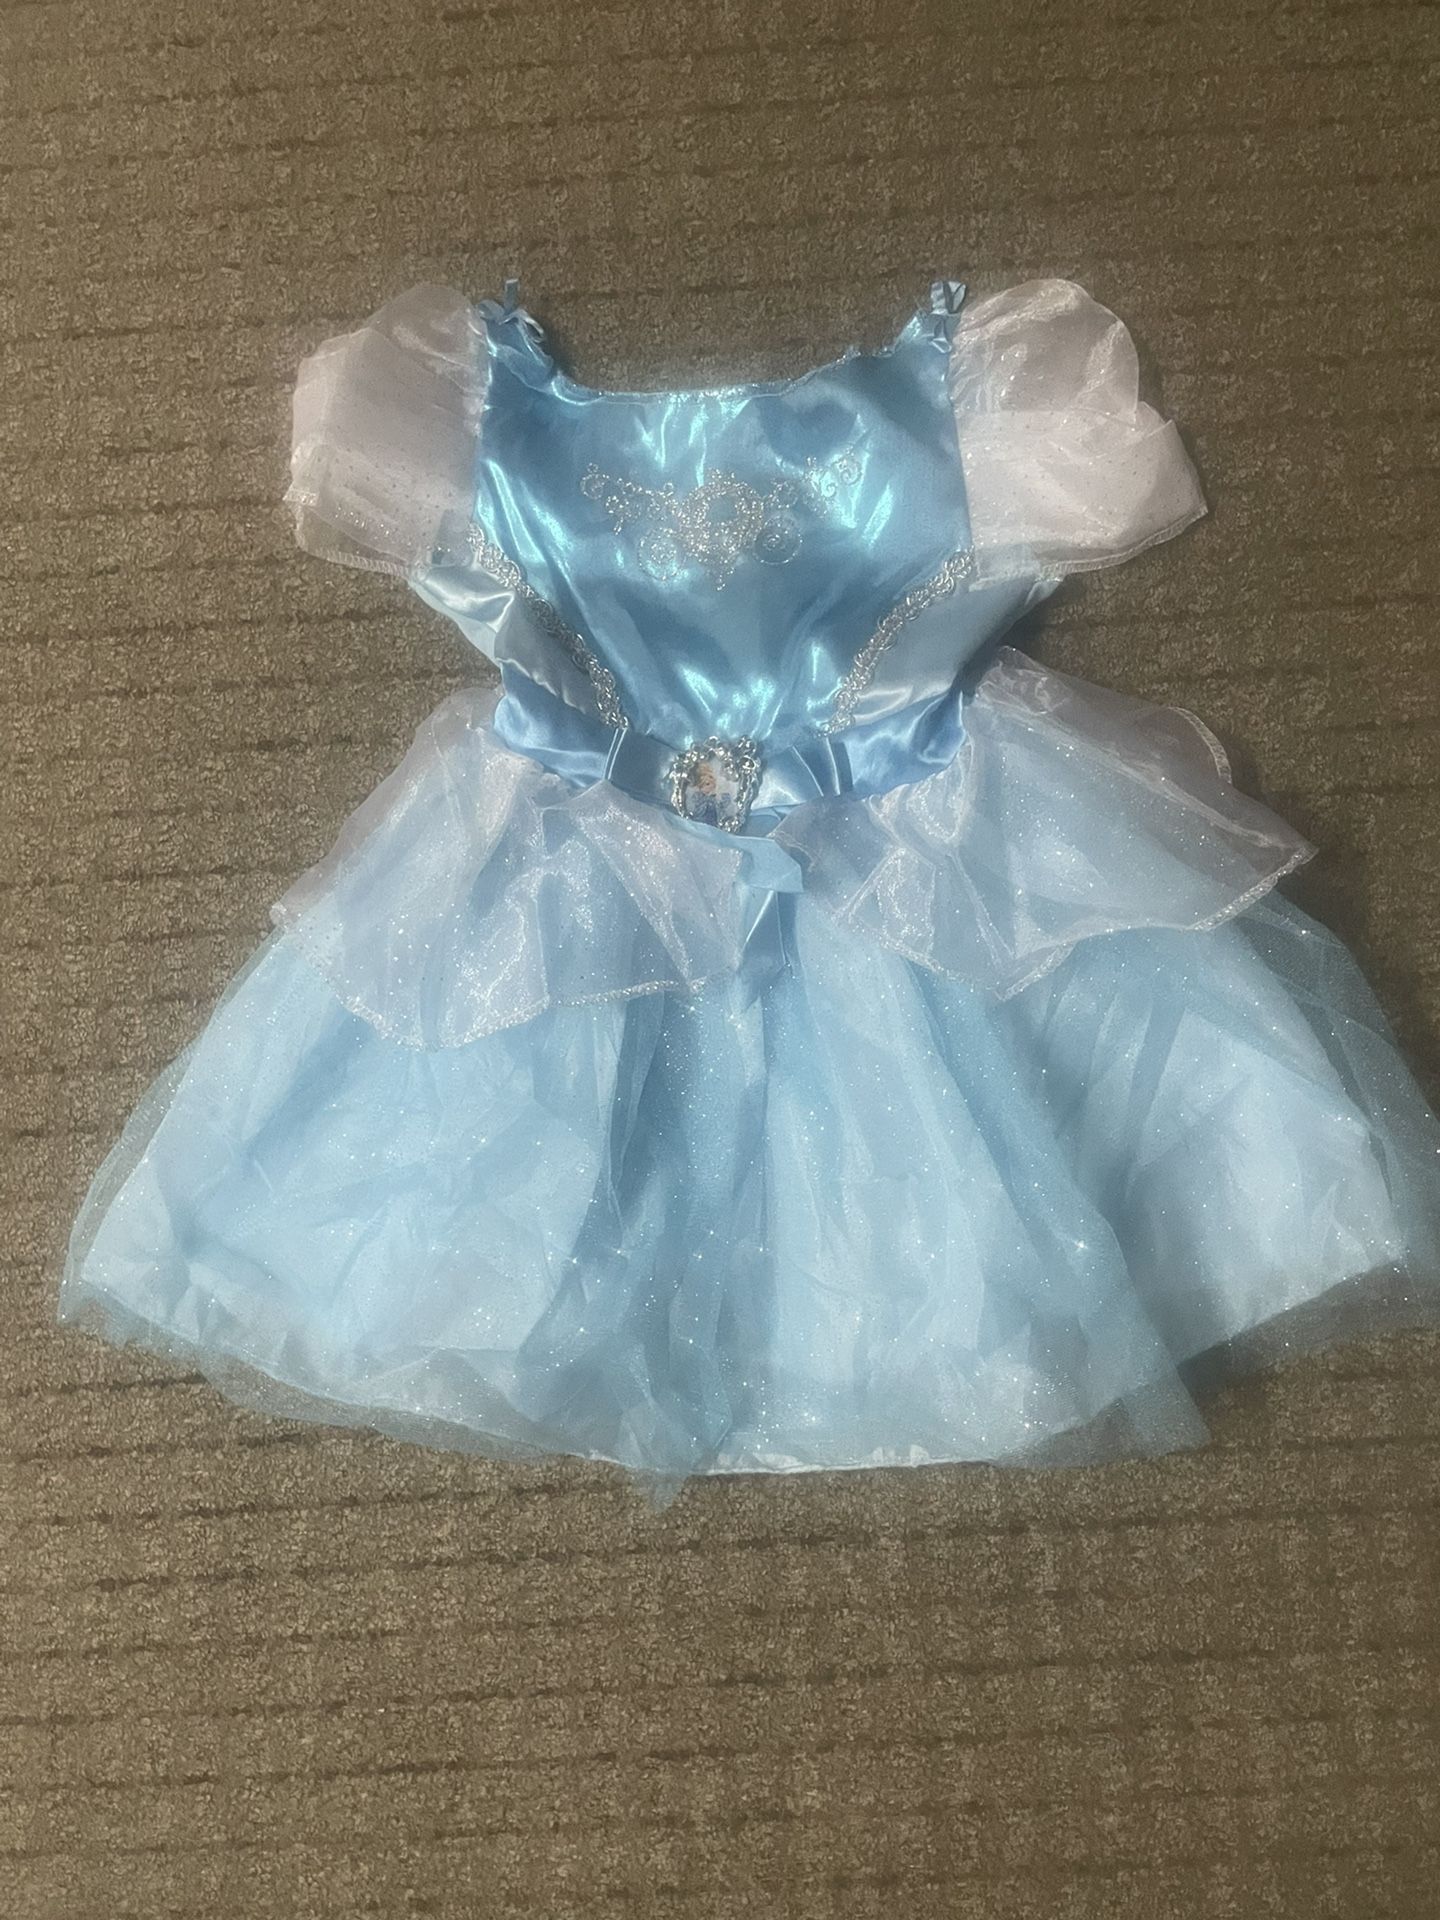 Cinderella Costume & Frozen’s Elsa Costume